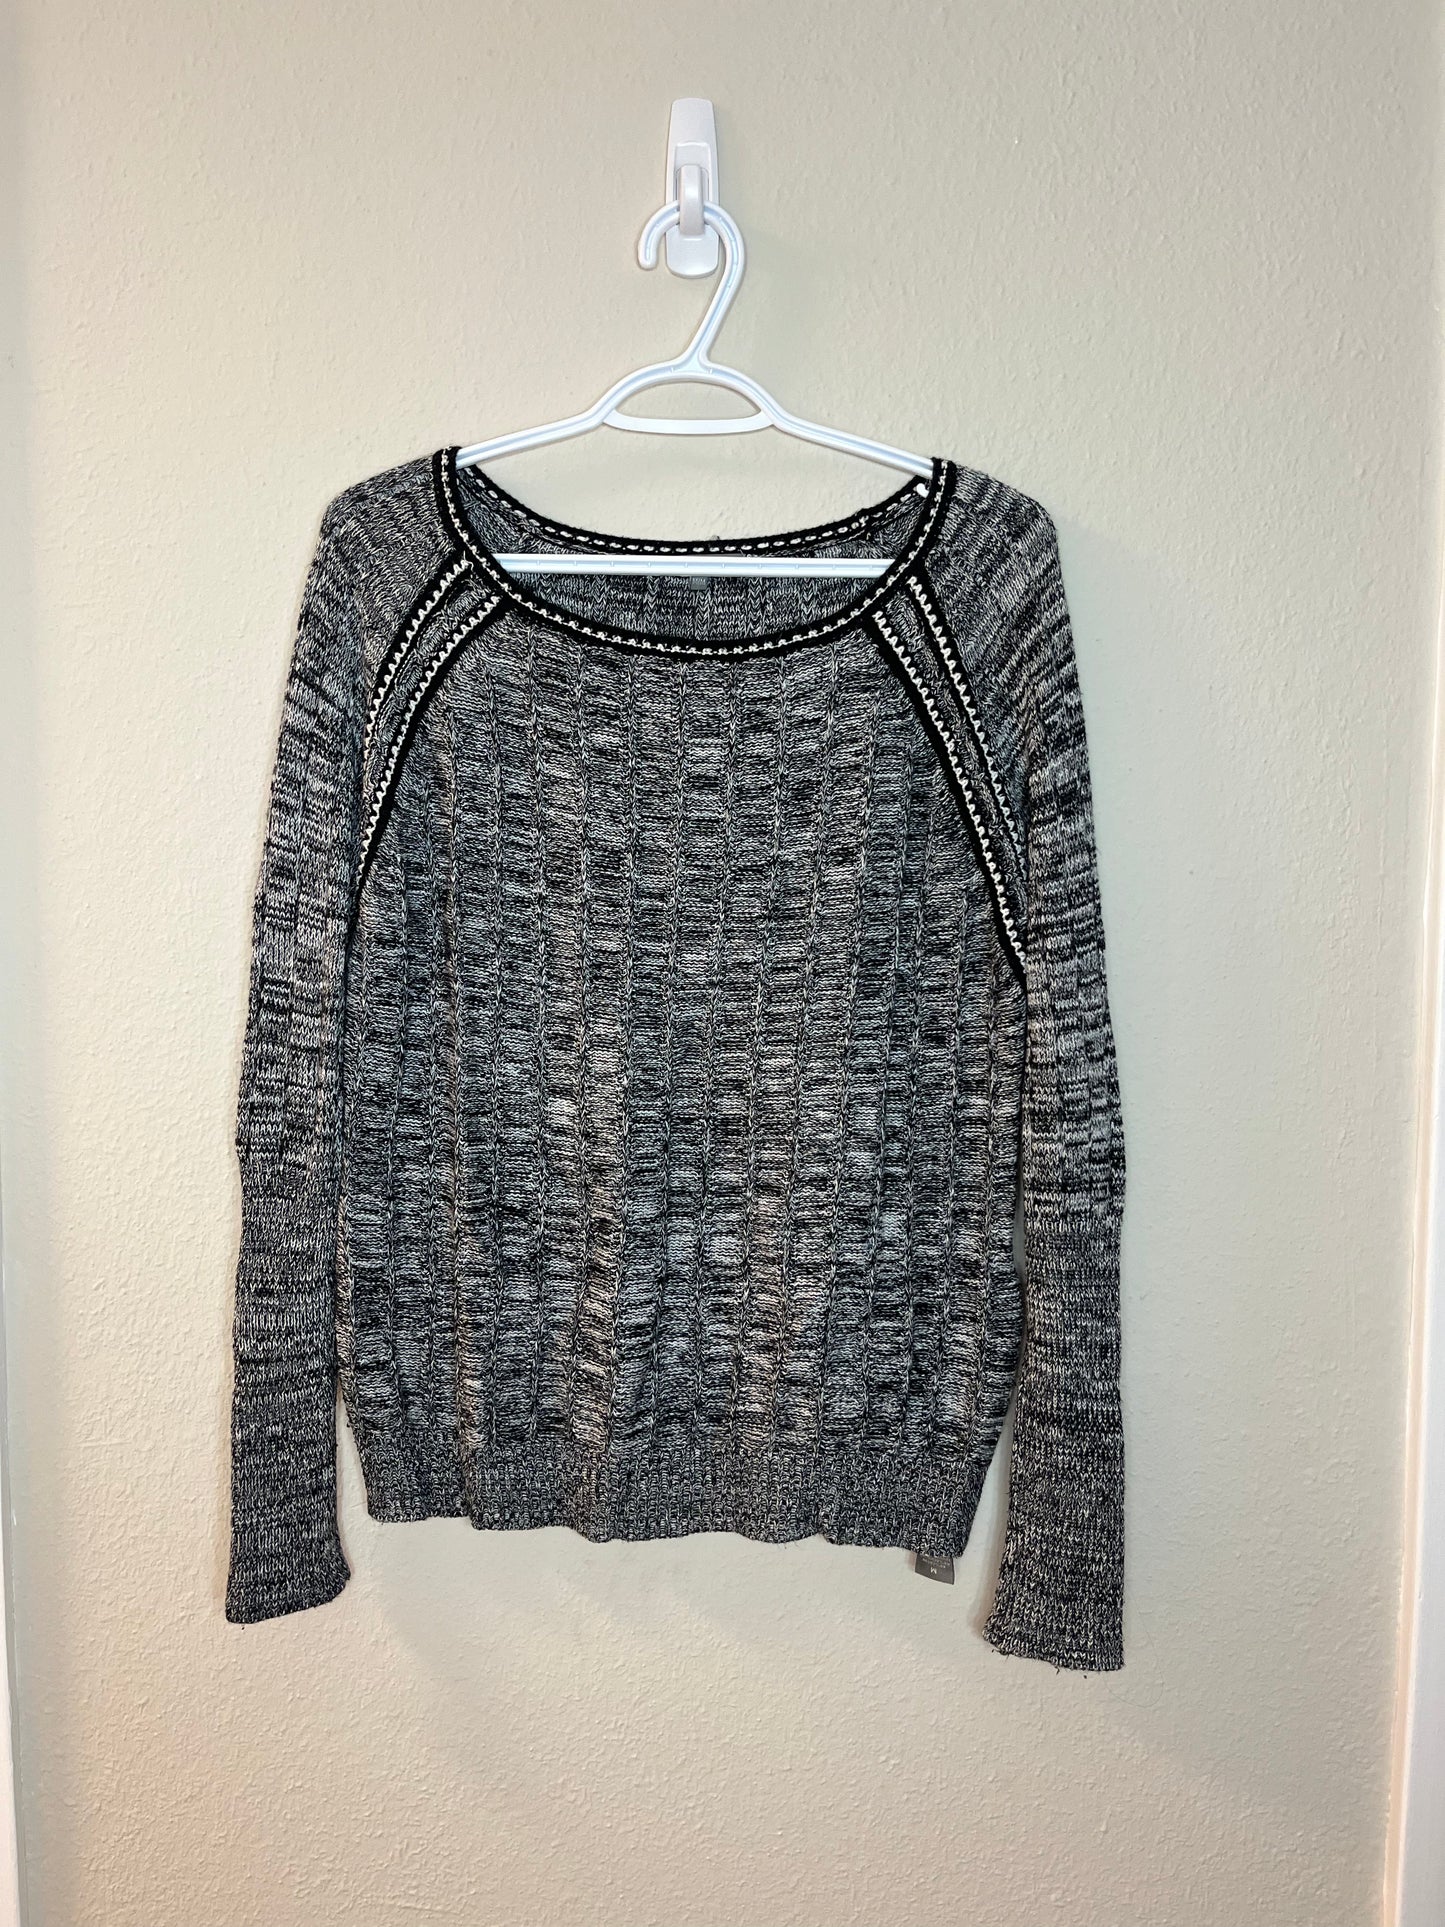 Retro-ology Sweater (medium)